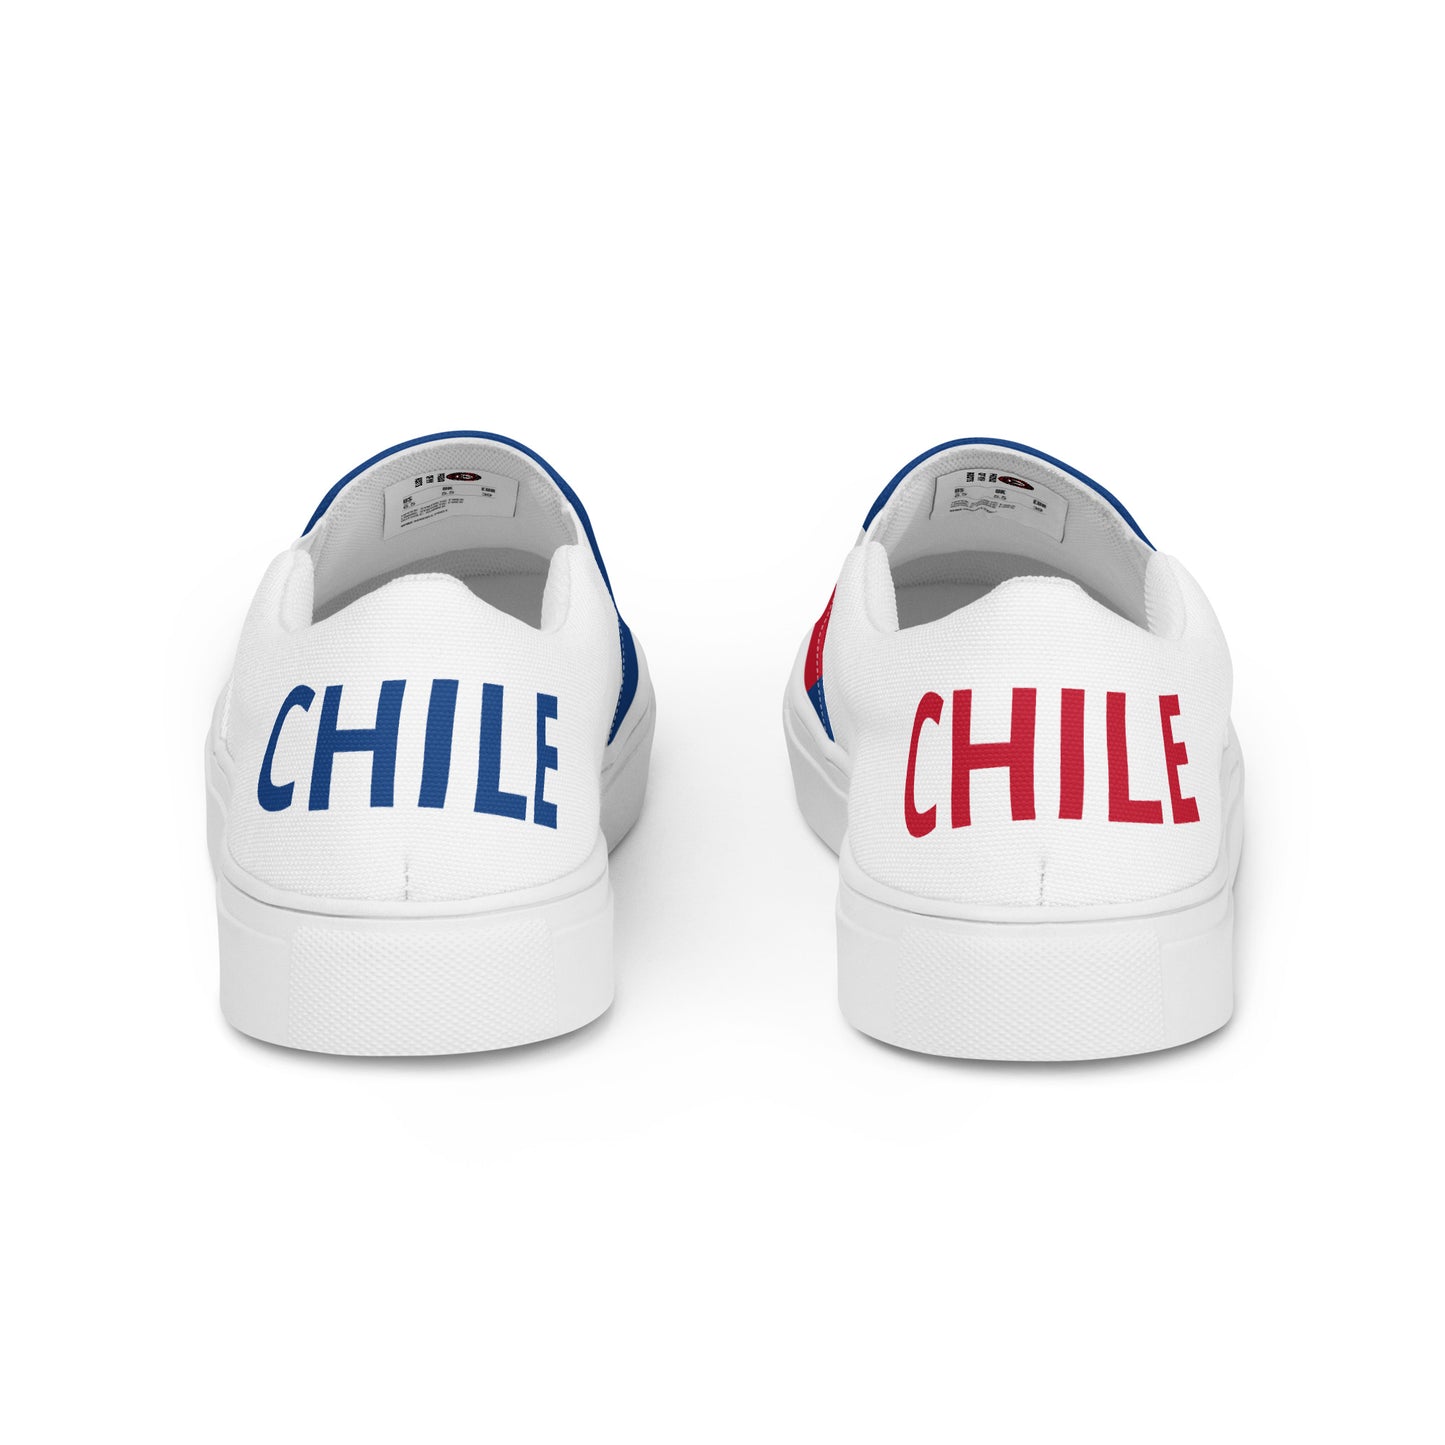 Chile - Hombre - Bandera - Zapatos Slip-on